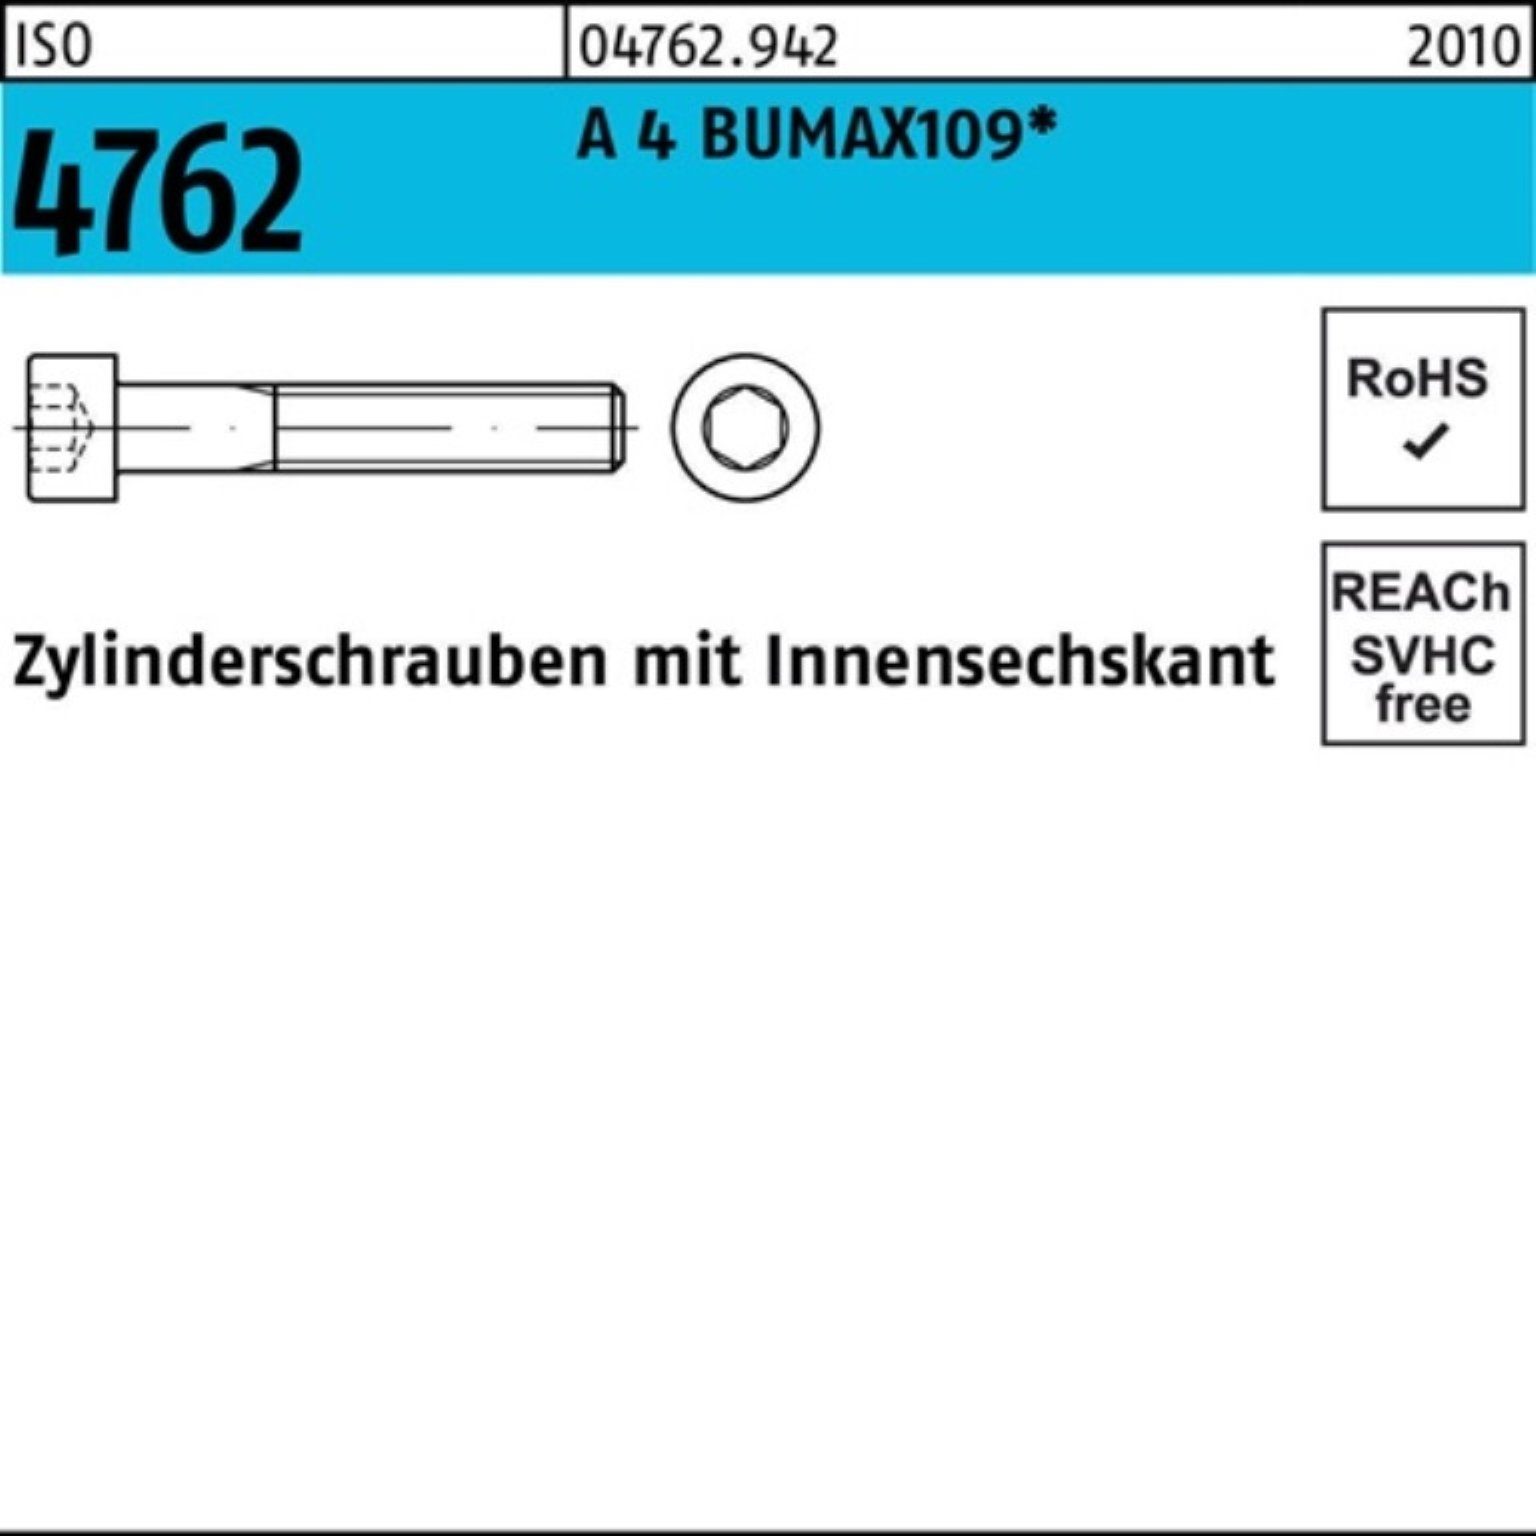 Bufab Zylinderschraube 100er Pack Zylinderschraube 100 M6x Innen-6kt 4 30 A ISO BUMAX109 4762